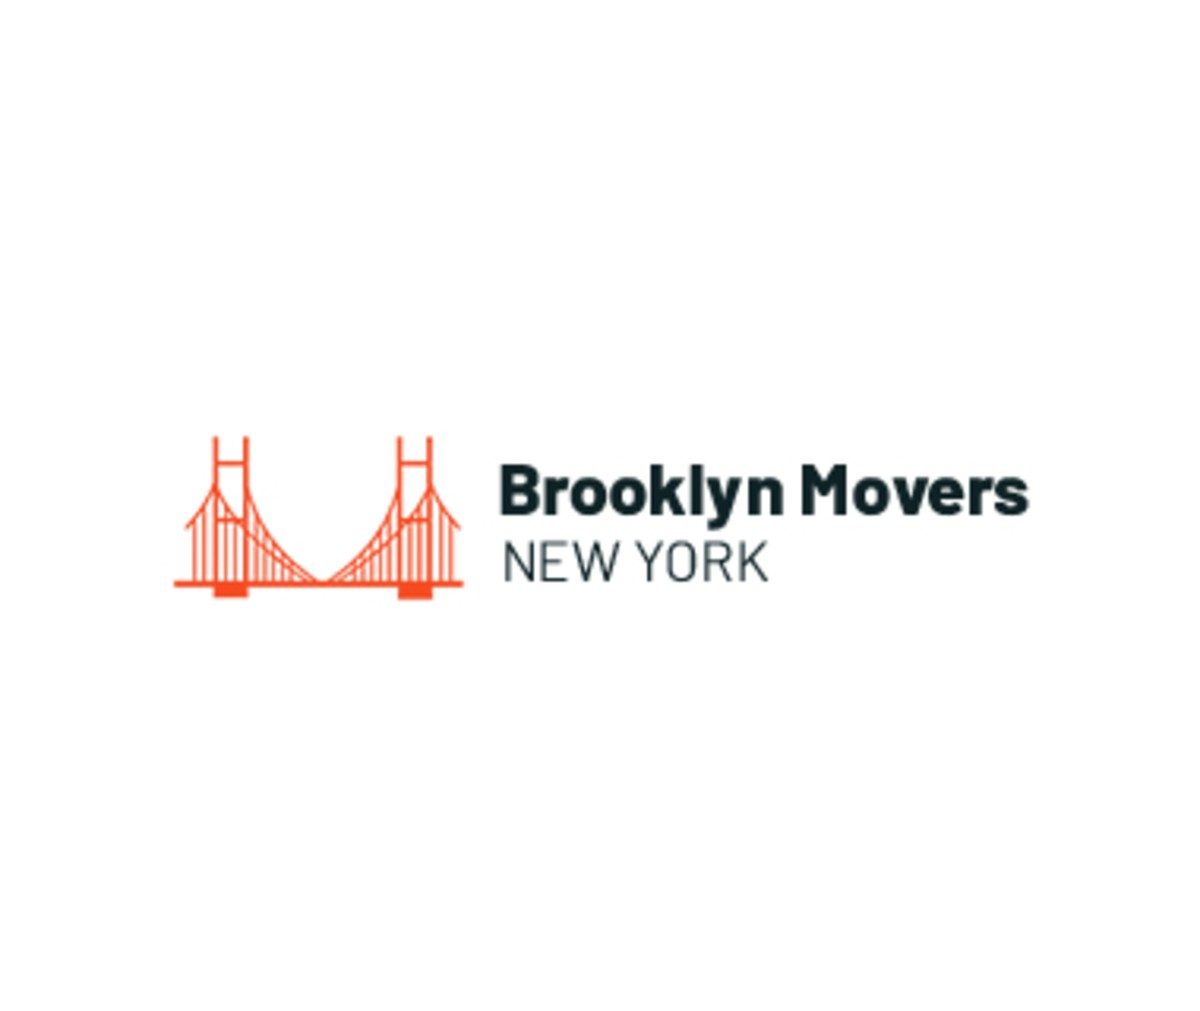 Brooklyn Movers New York - Logo 1200x1000